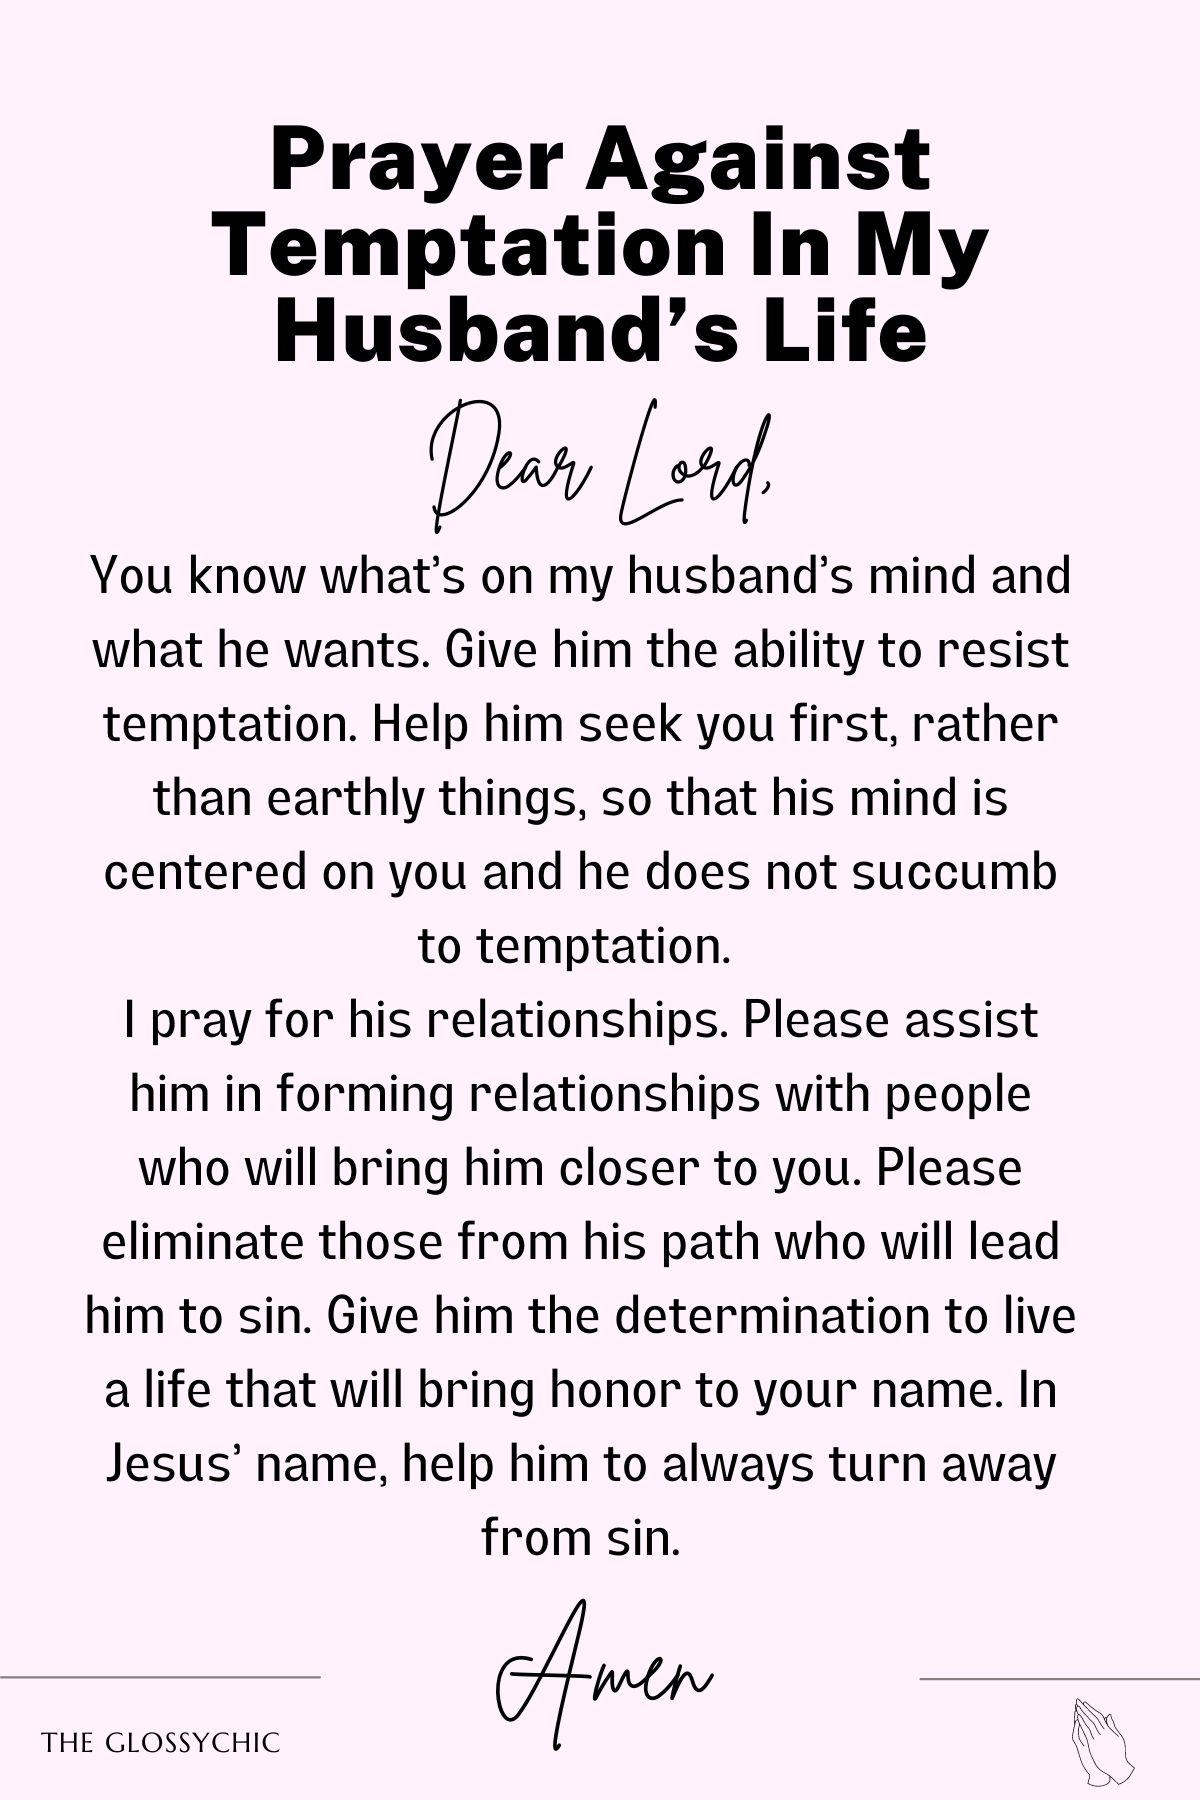 Prayer against temptation in my husband’s life